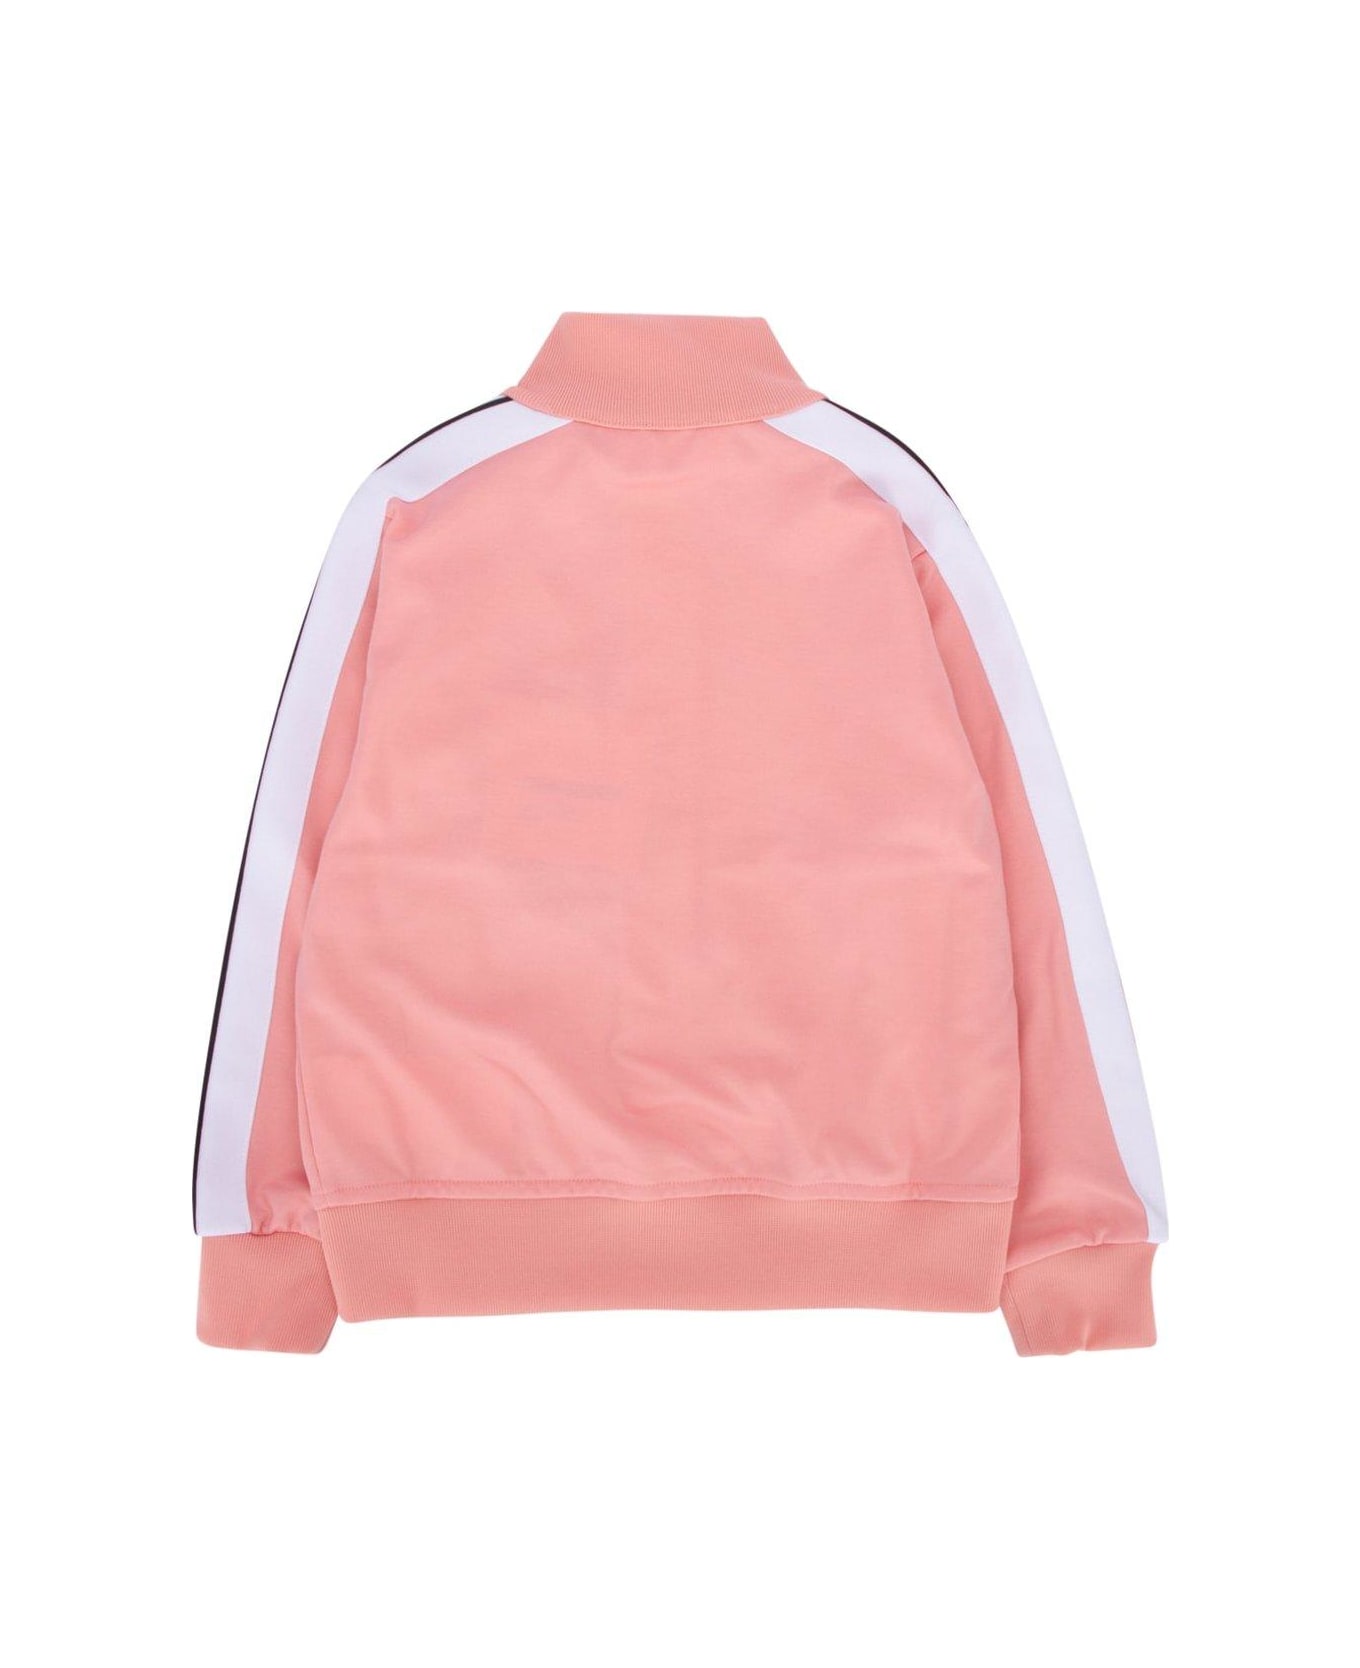 Palm Angels Zipped Side Striped Track Jacket - Pink White コート＆ジャケット